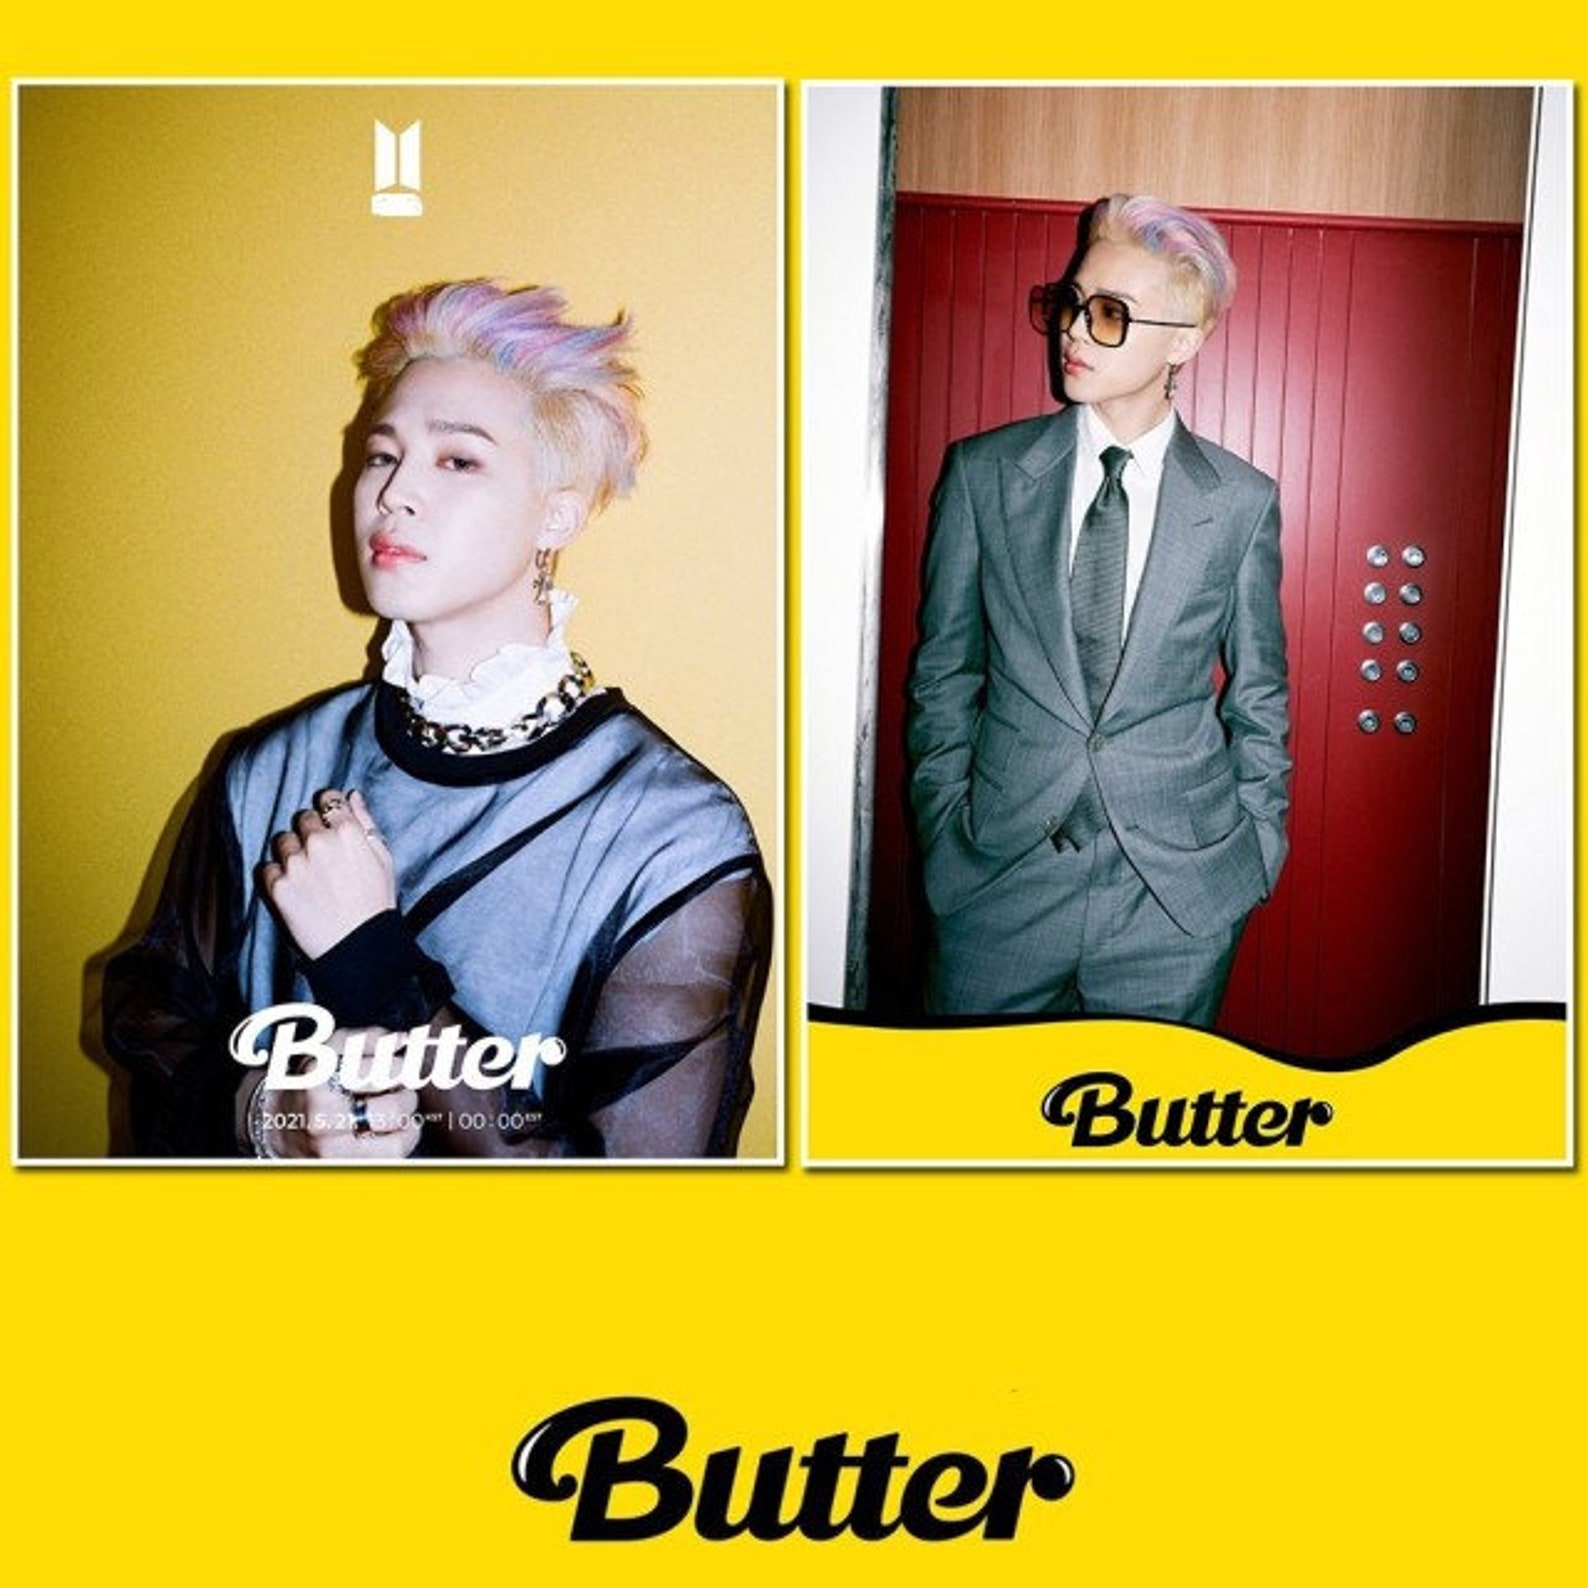 Ảnh BTS Butter - Jimin